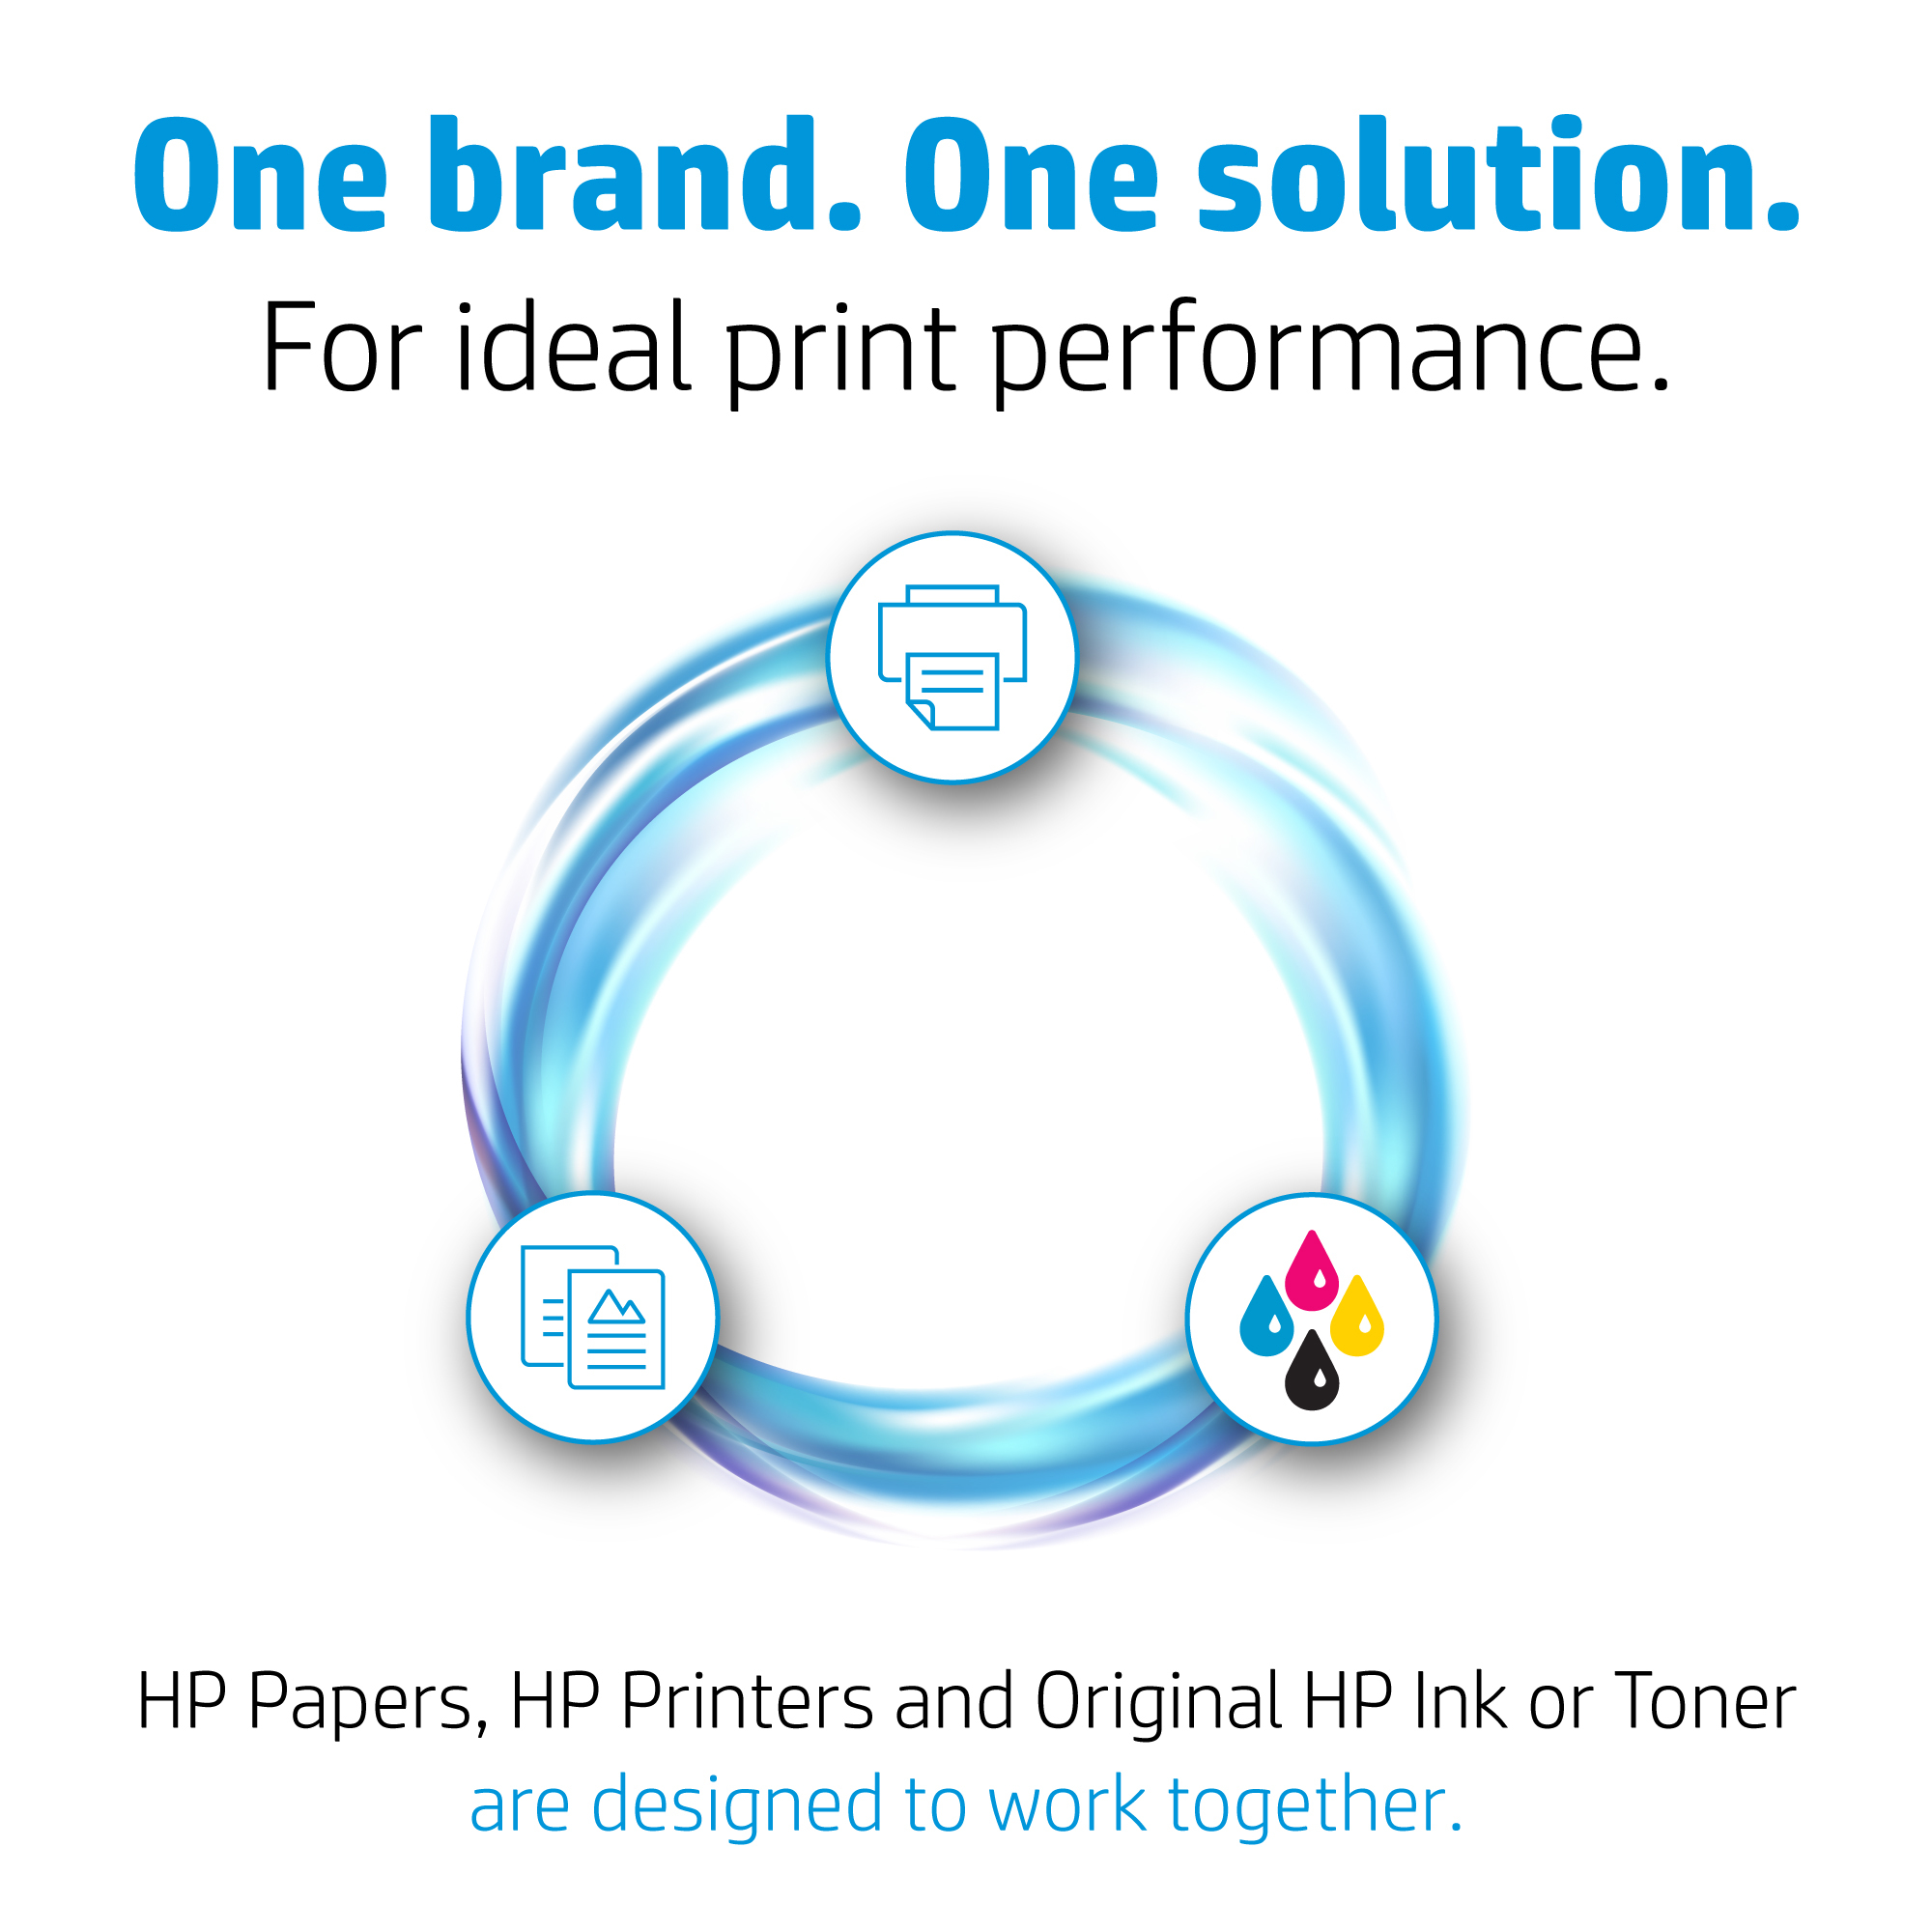 HP LaserJet 656X - Tonereinheit Original - Magenta - 22.000 Seiten